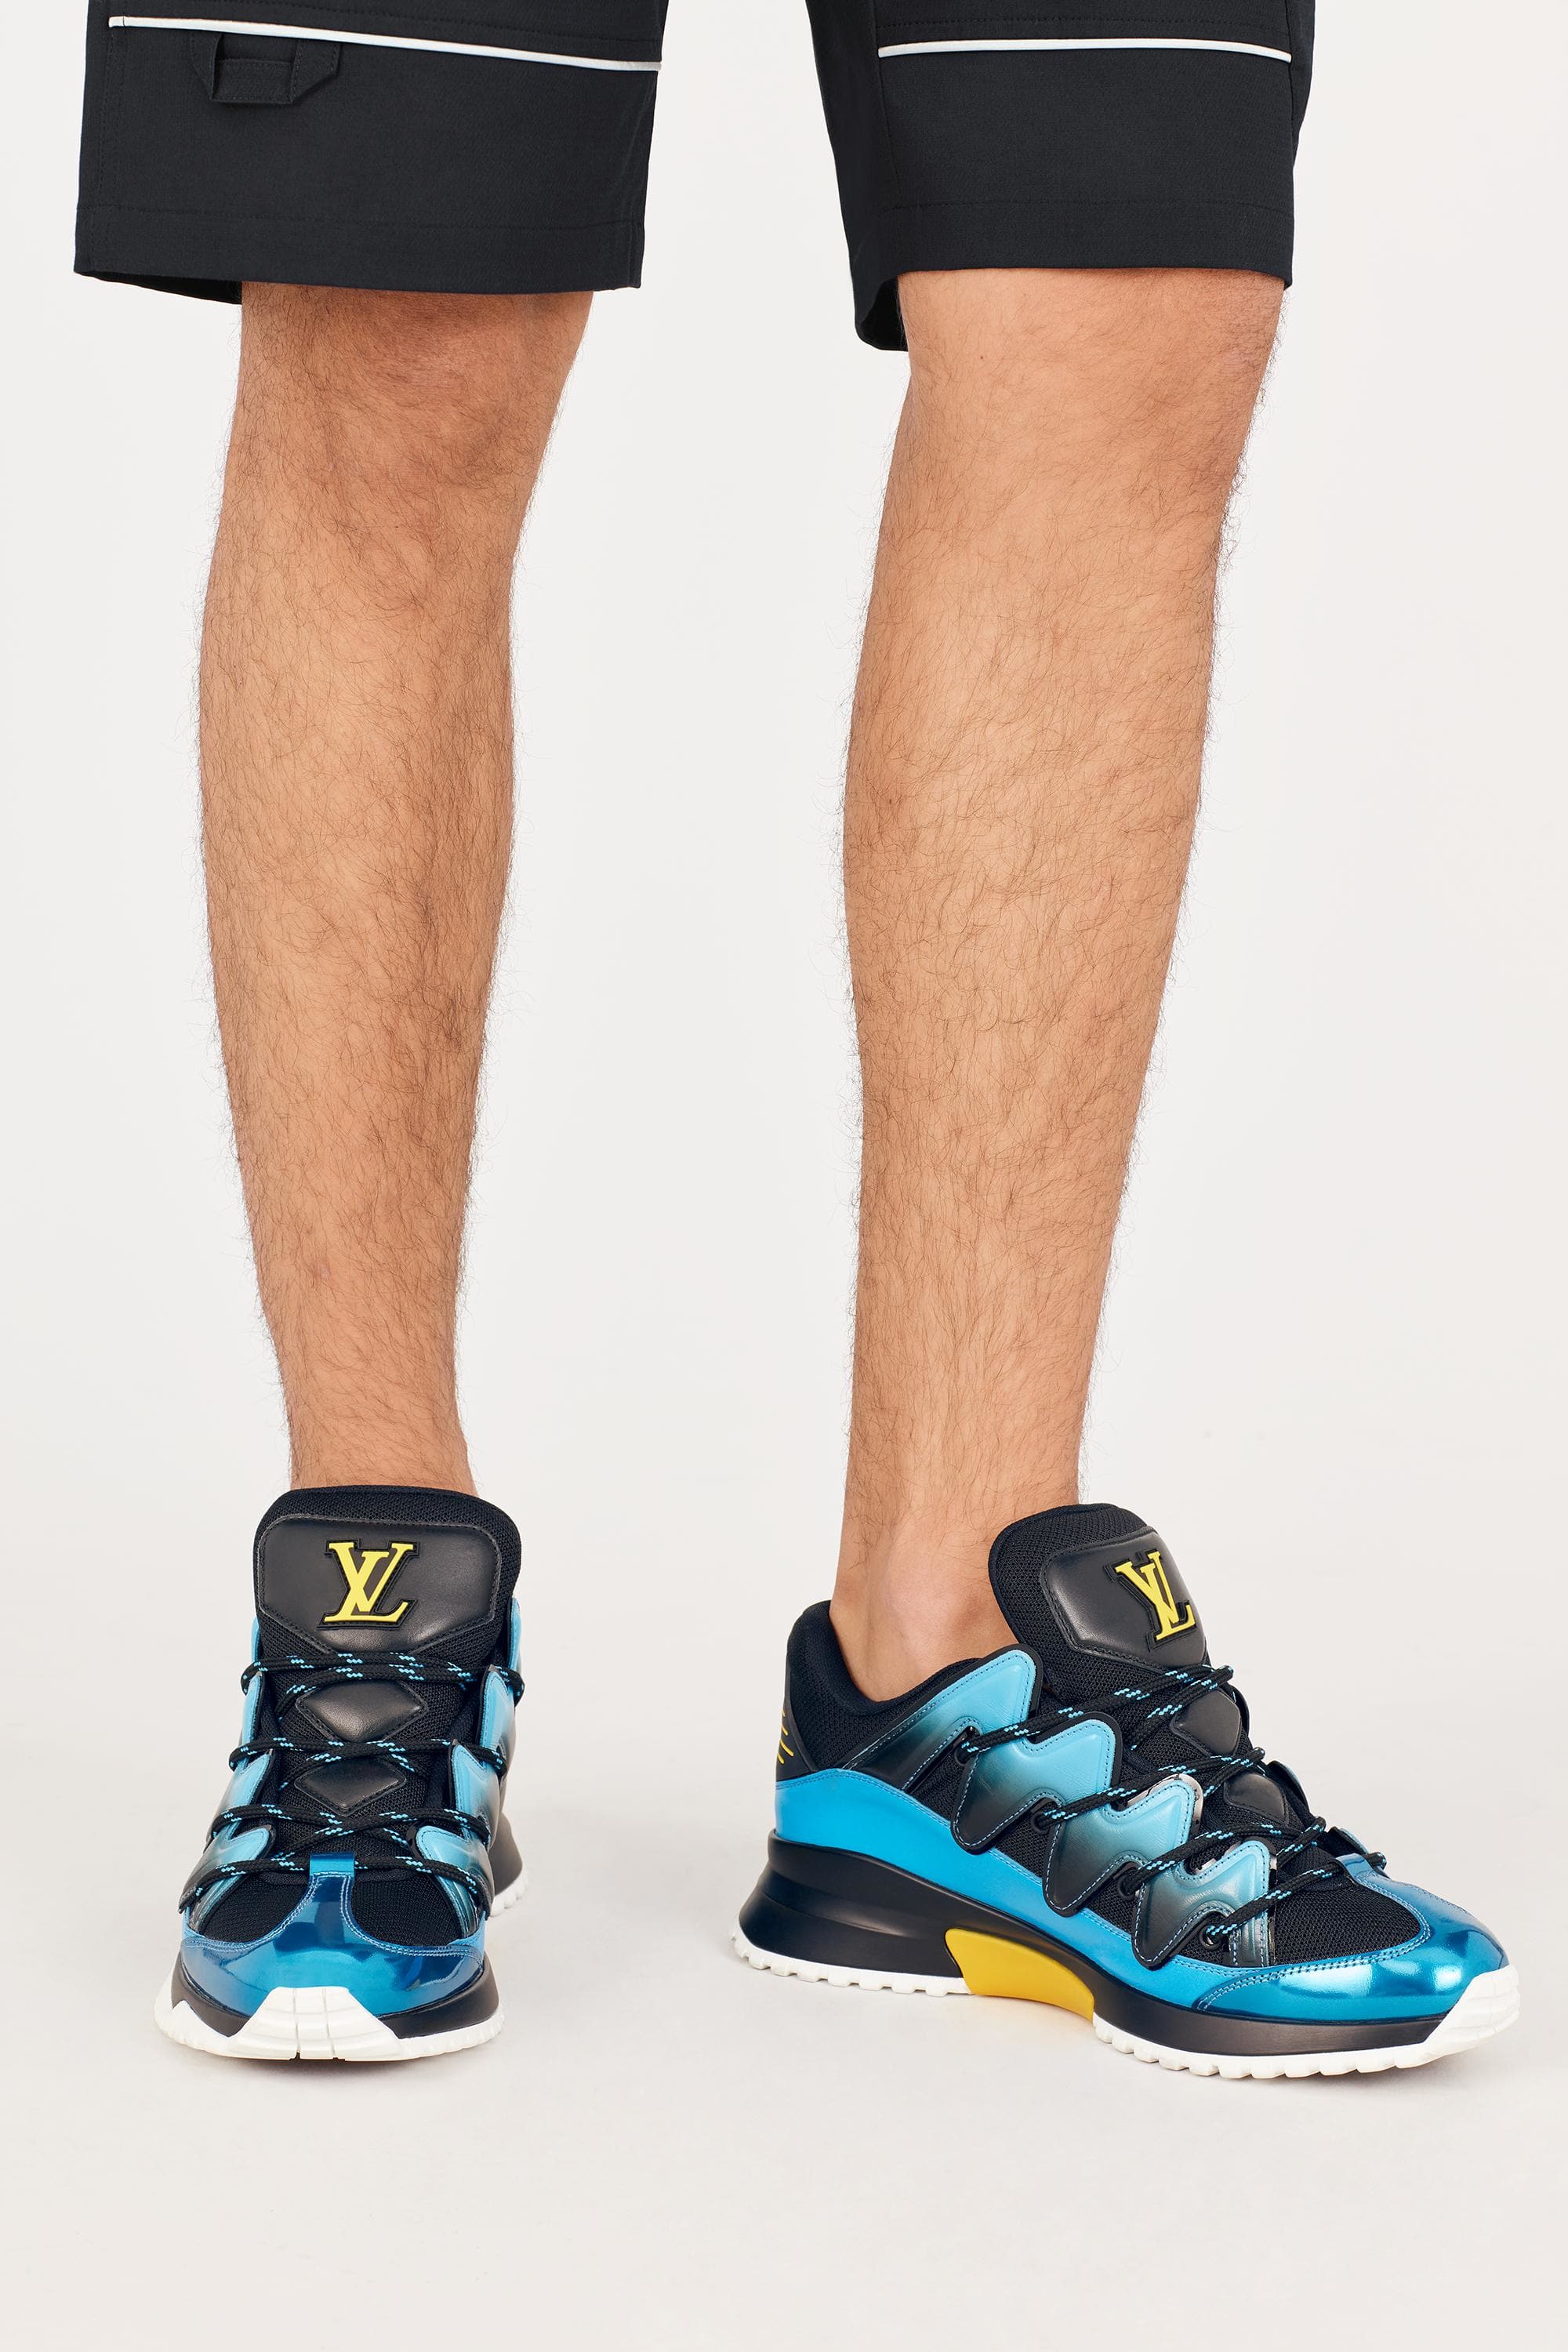 Virgil Abloh's Chunky Louis Vuitton Zig Zag Releases | Nice Kicks